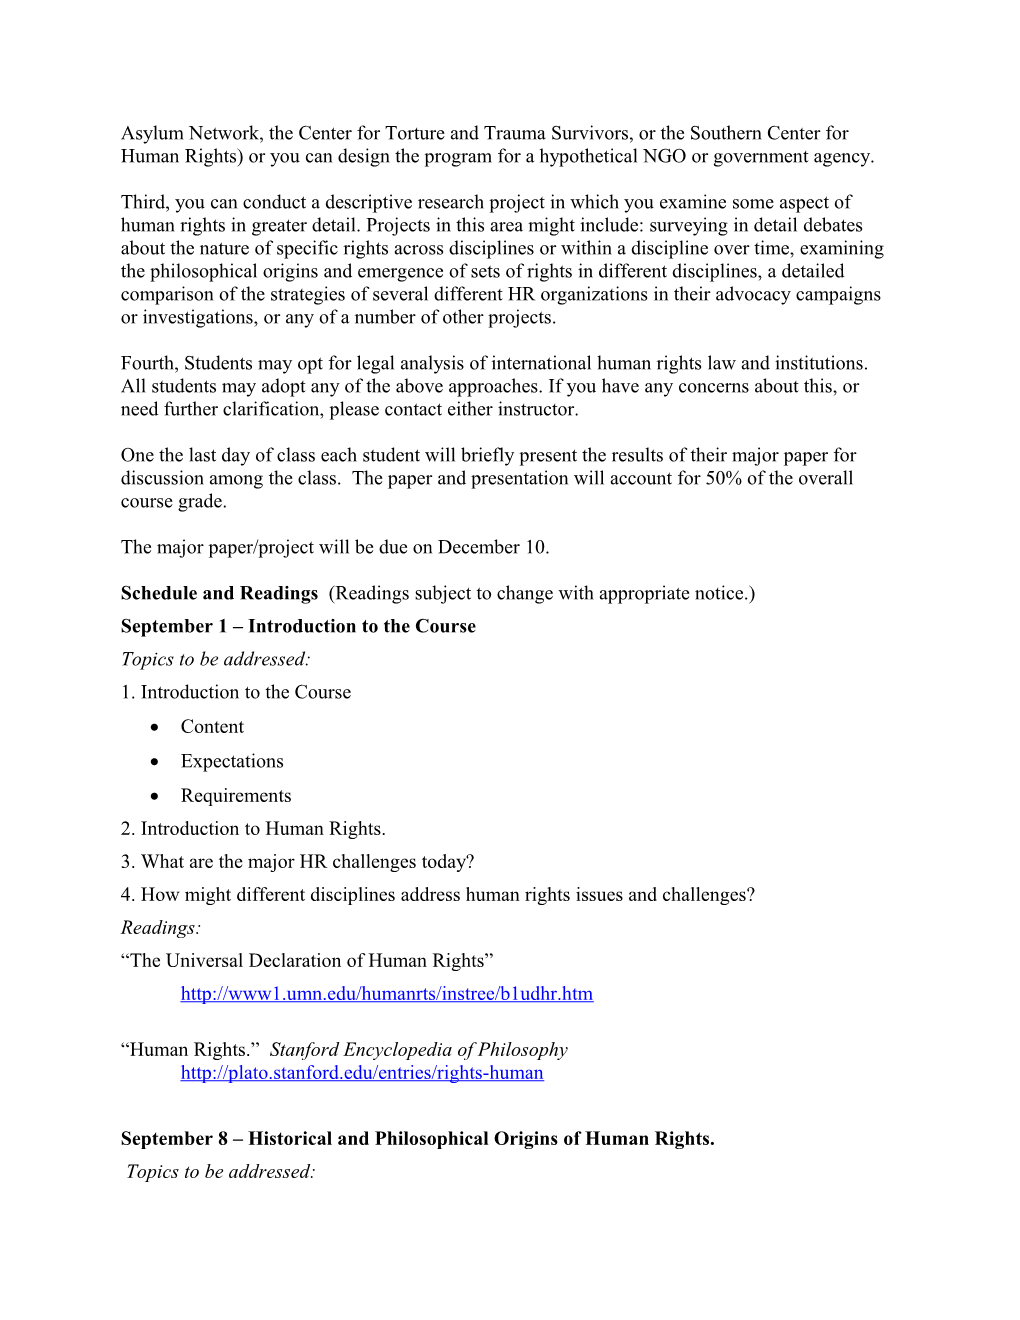 Interdisciplinary Perspectives on Human Rights